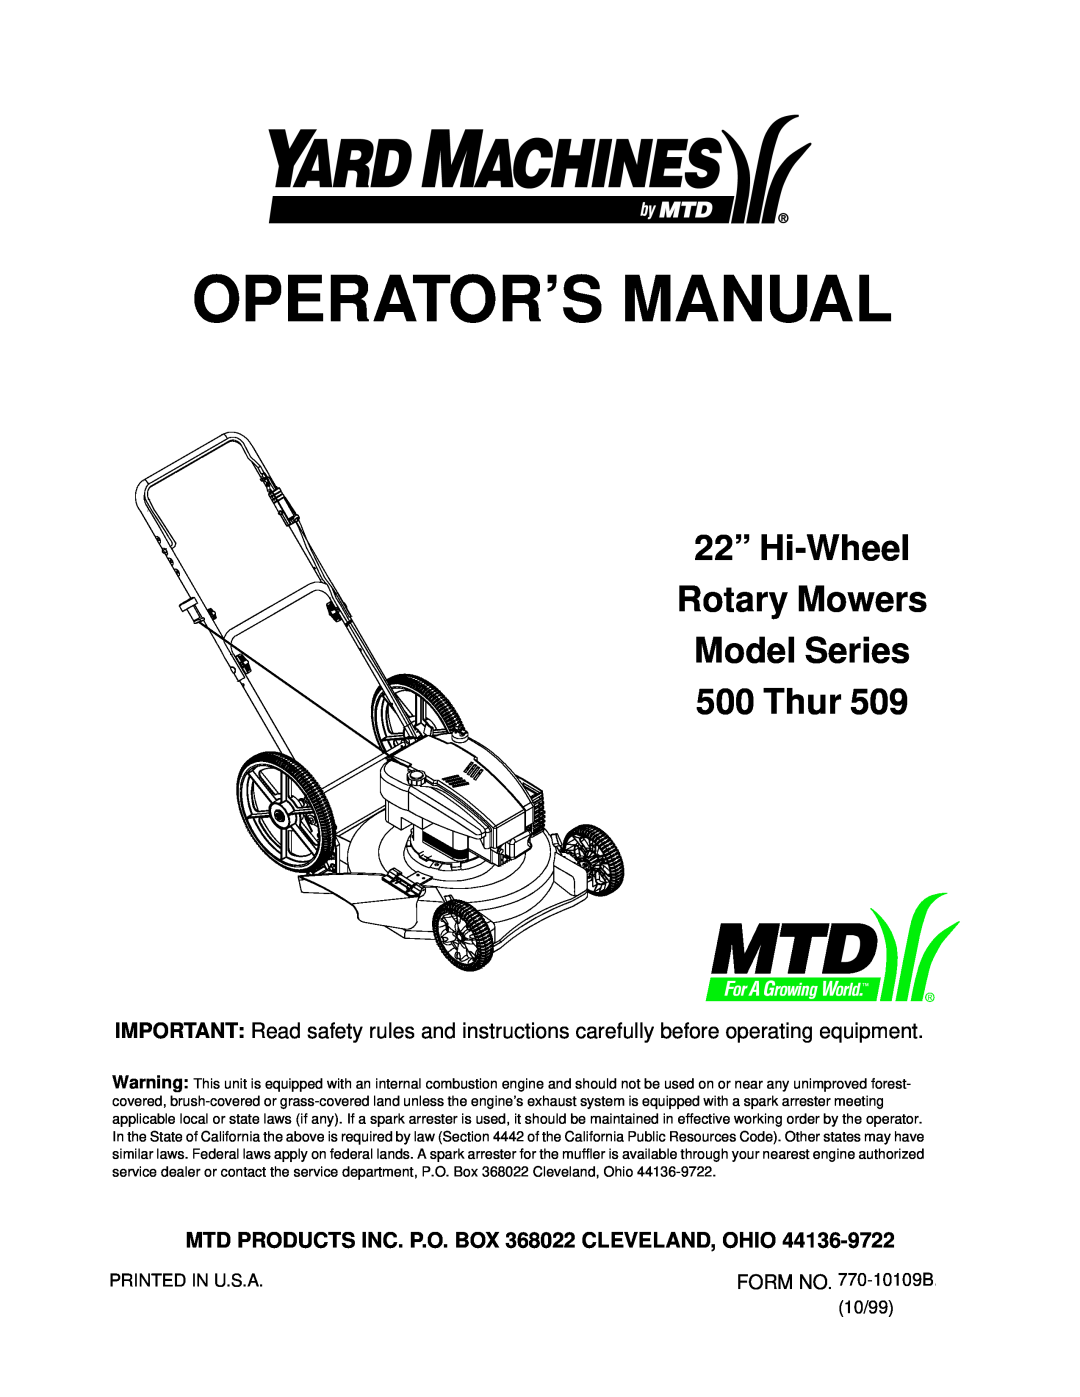 Yard Machines 509 manual MTD PRODUCTS INC. P.O. BOX 368022 CLEVELAND, OHIO, Operator’S Manual 